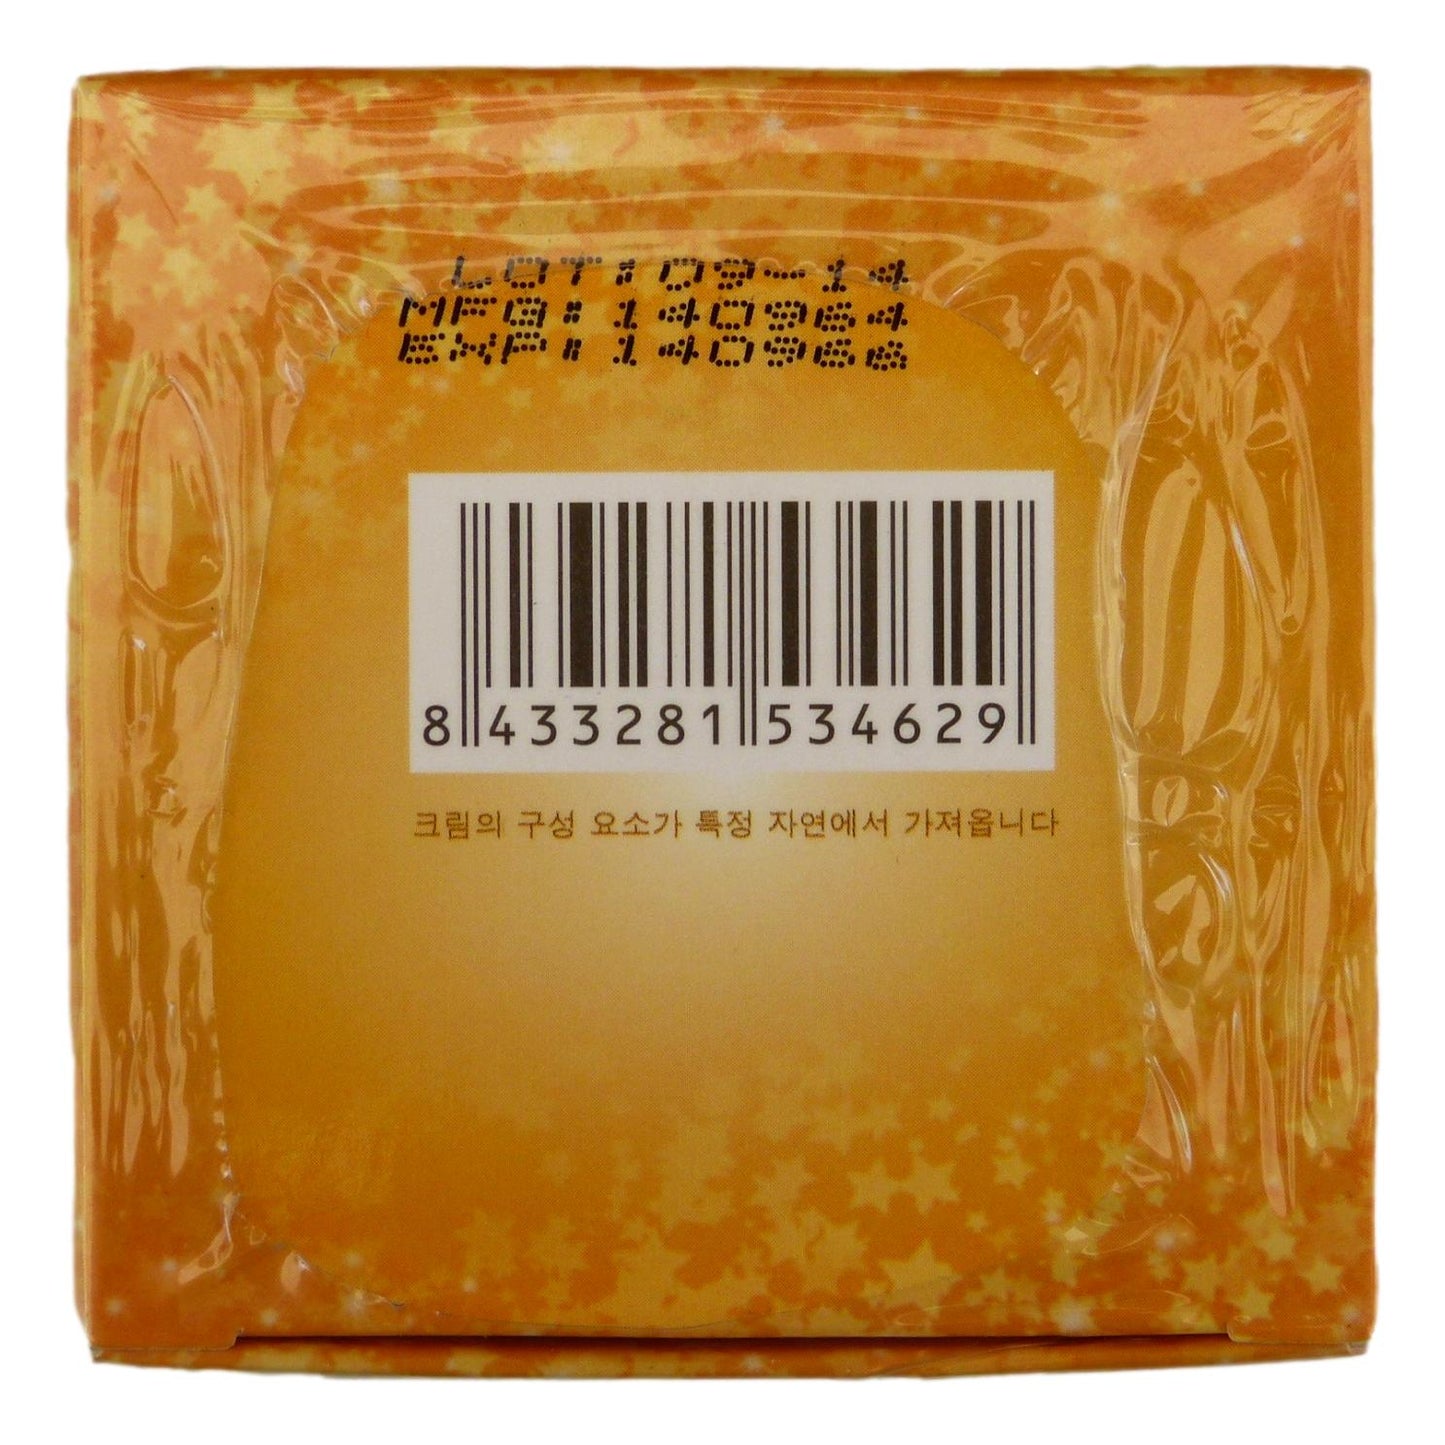 Hiyady Hyaluronic Filler Ultra Lift Whitening Night Cream Pack of 4 - Asian Beauty Supply